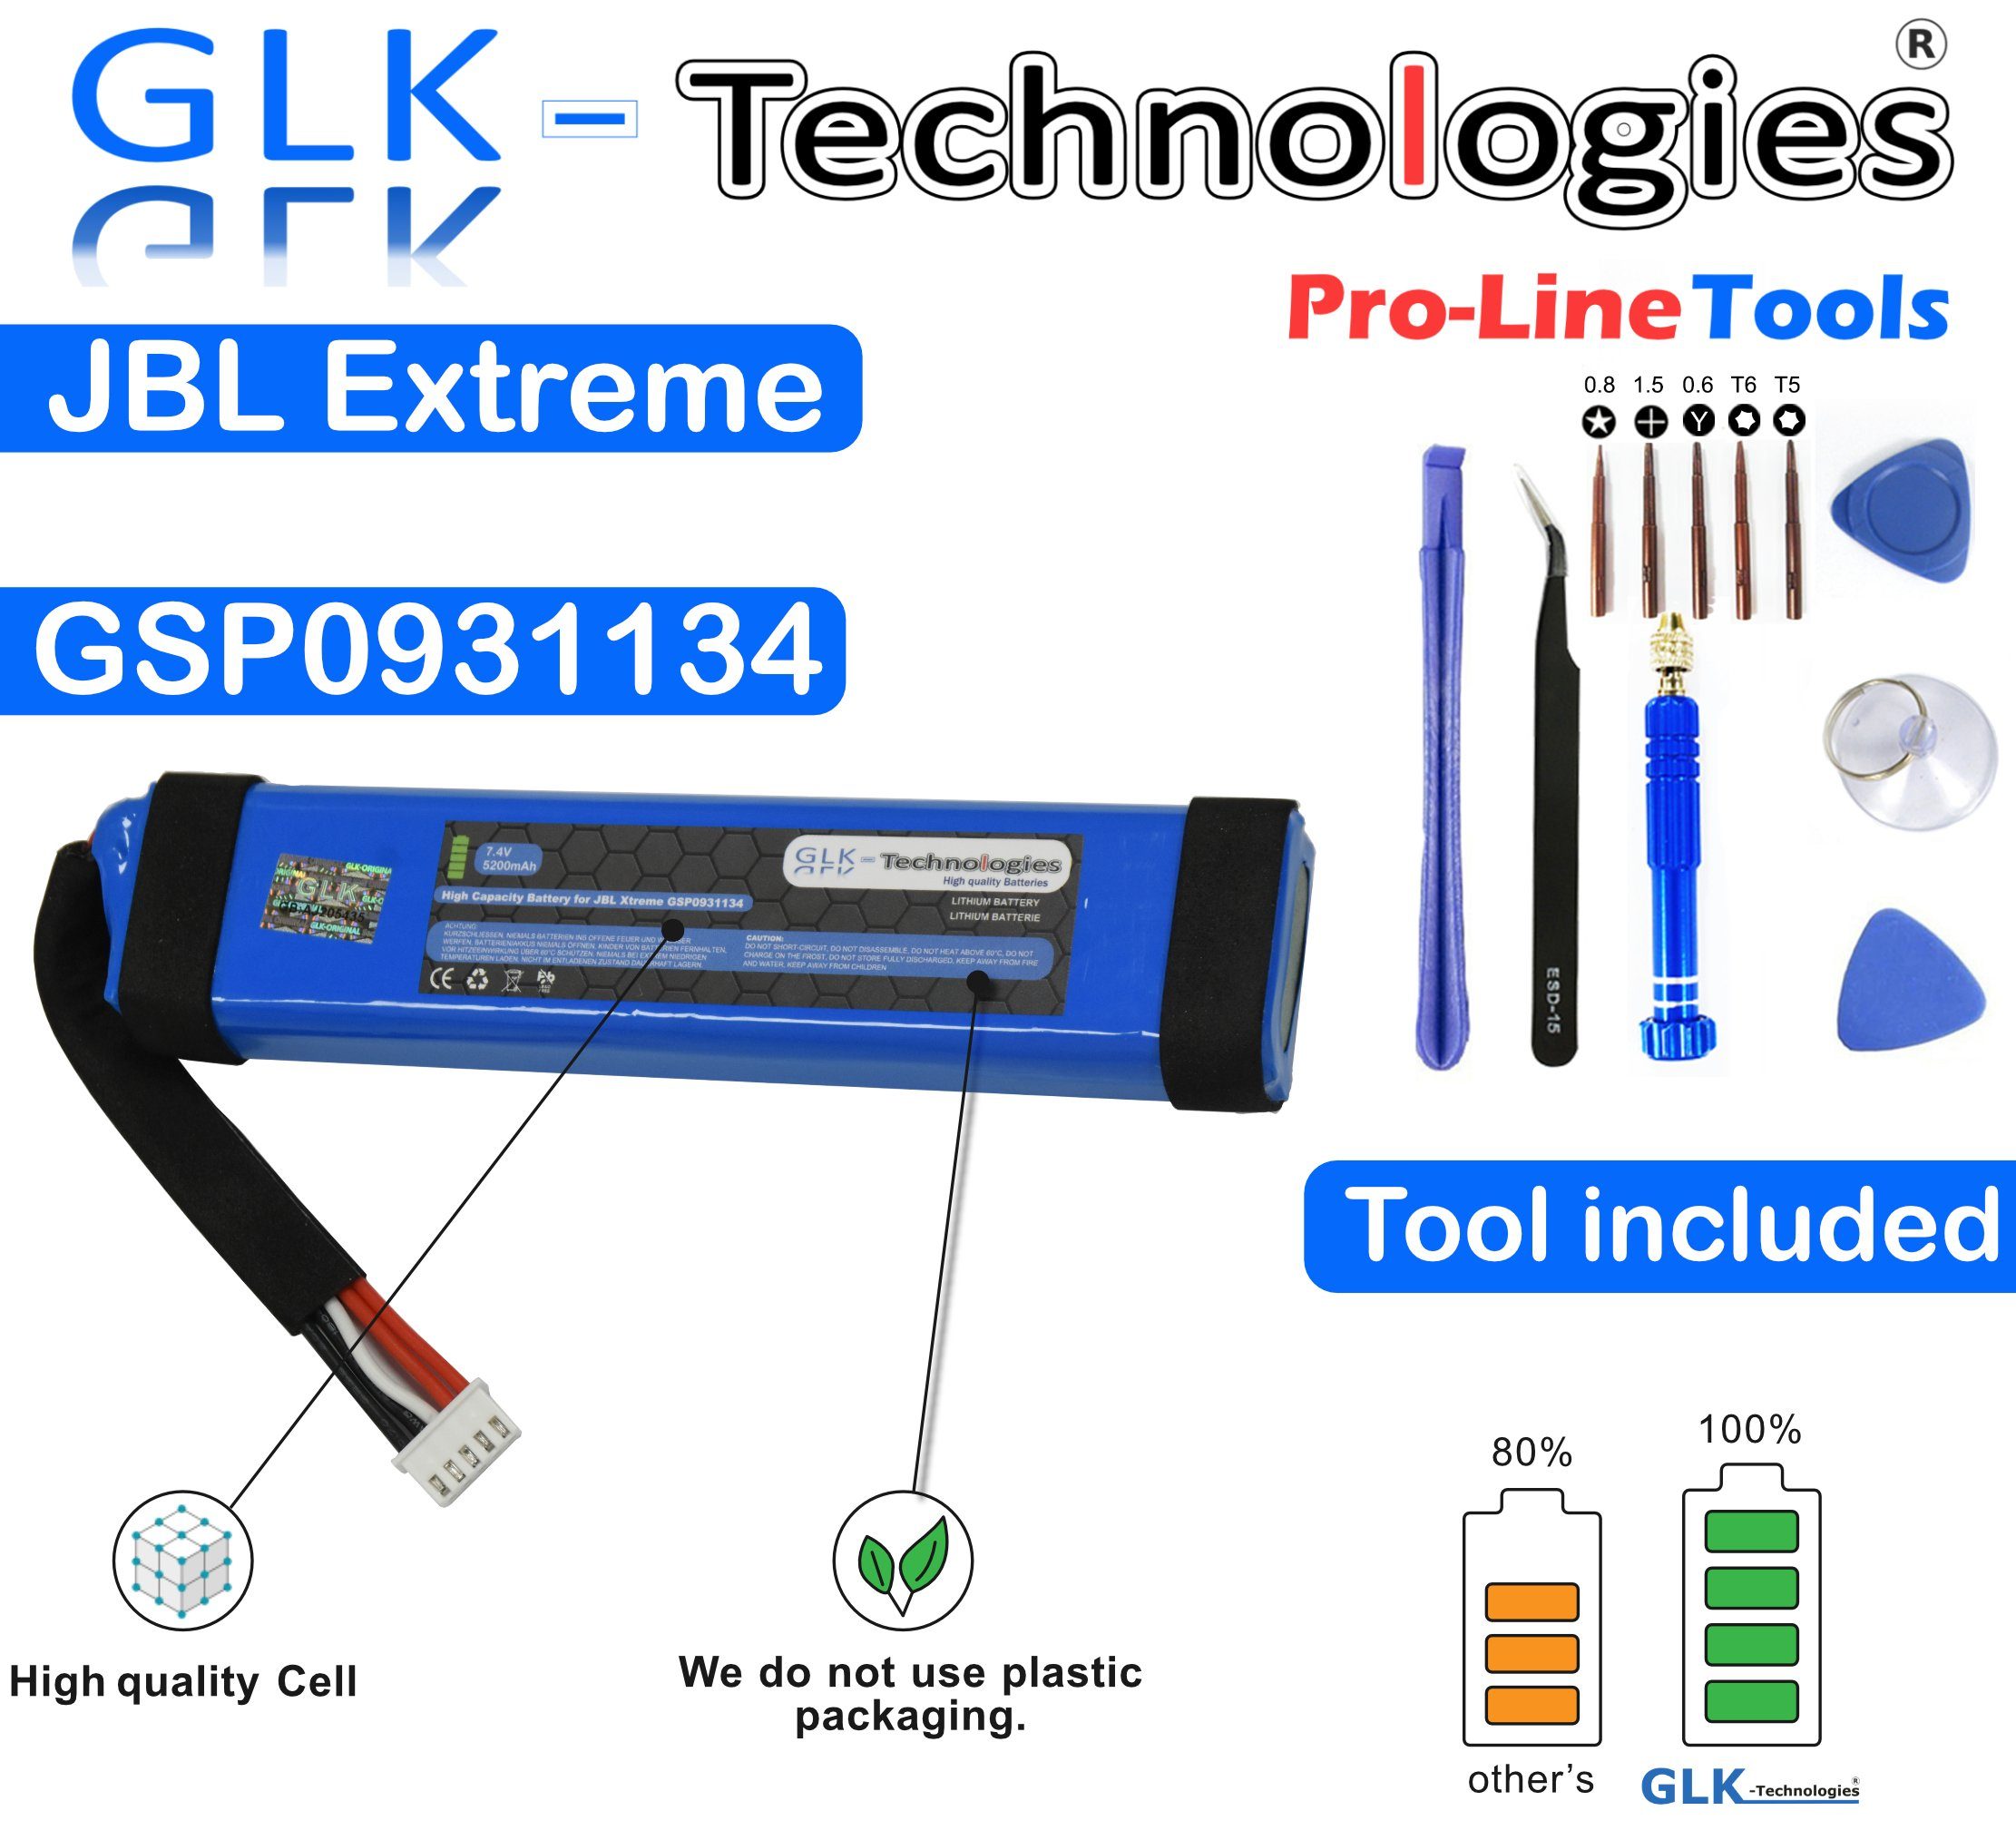 Akku Battery GLK-Technologies GSP0931134 Bluetooth Lautsprecher für JBL 1 GLK Akku Extreme